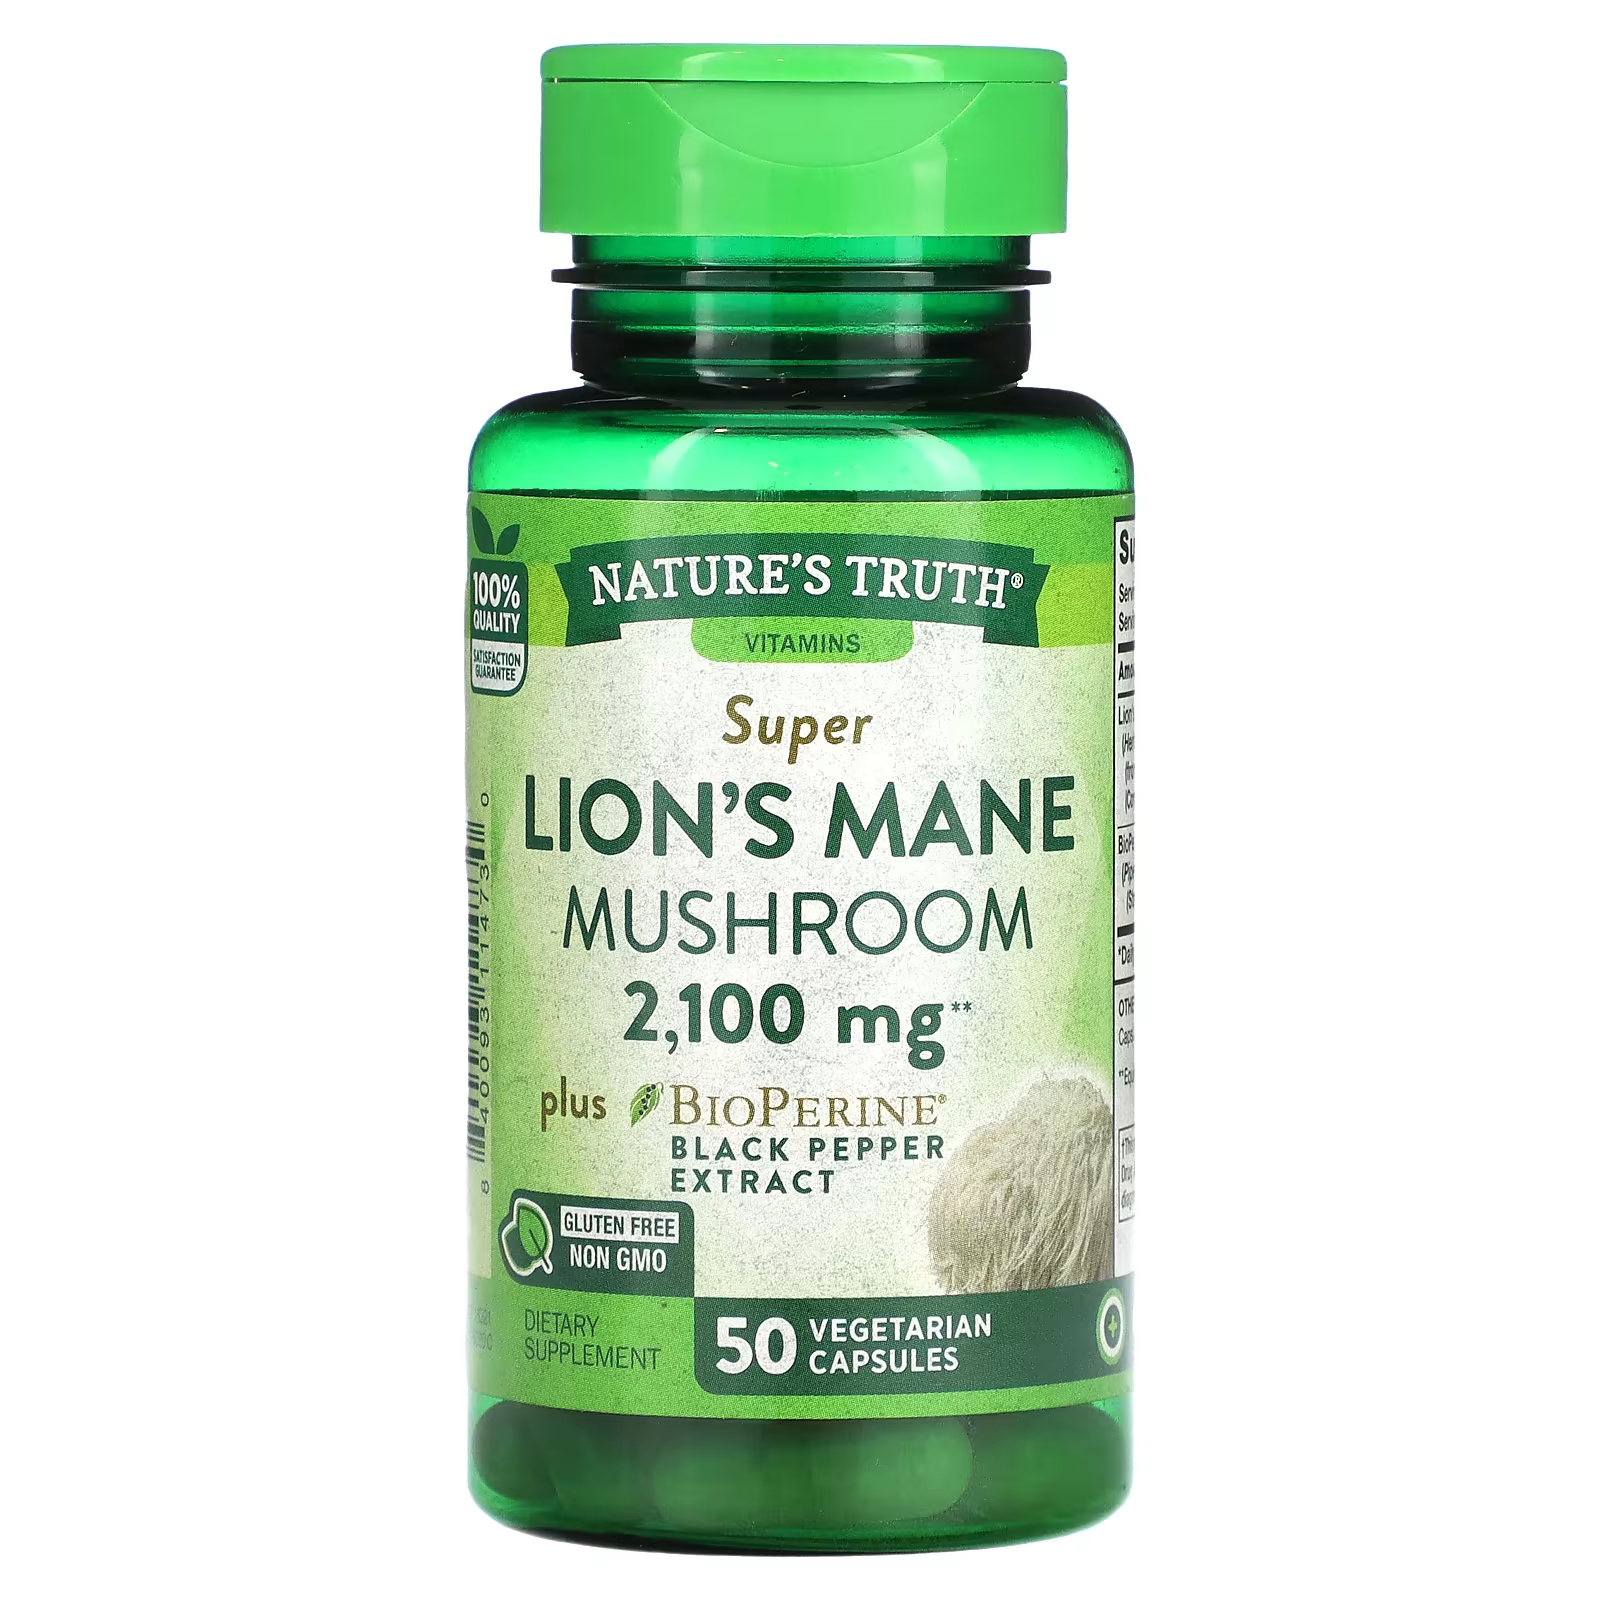 300 500gram lion s mane mushroom hericium erinaceus extract 50% polysaccharide powder Гриб суперльвиной гривы плюс биоперин Nature's Truth, 50 вегетарианских капсул